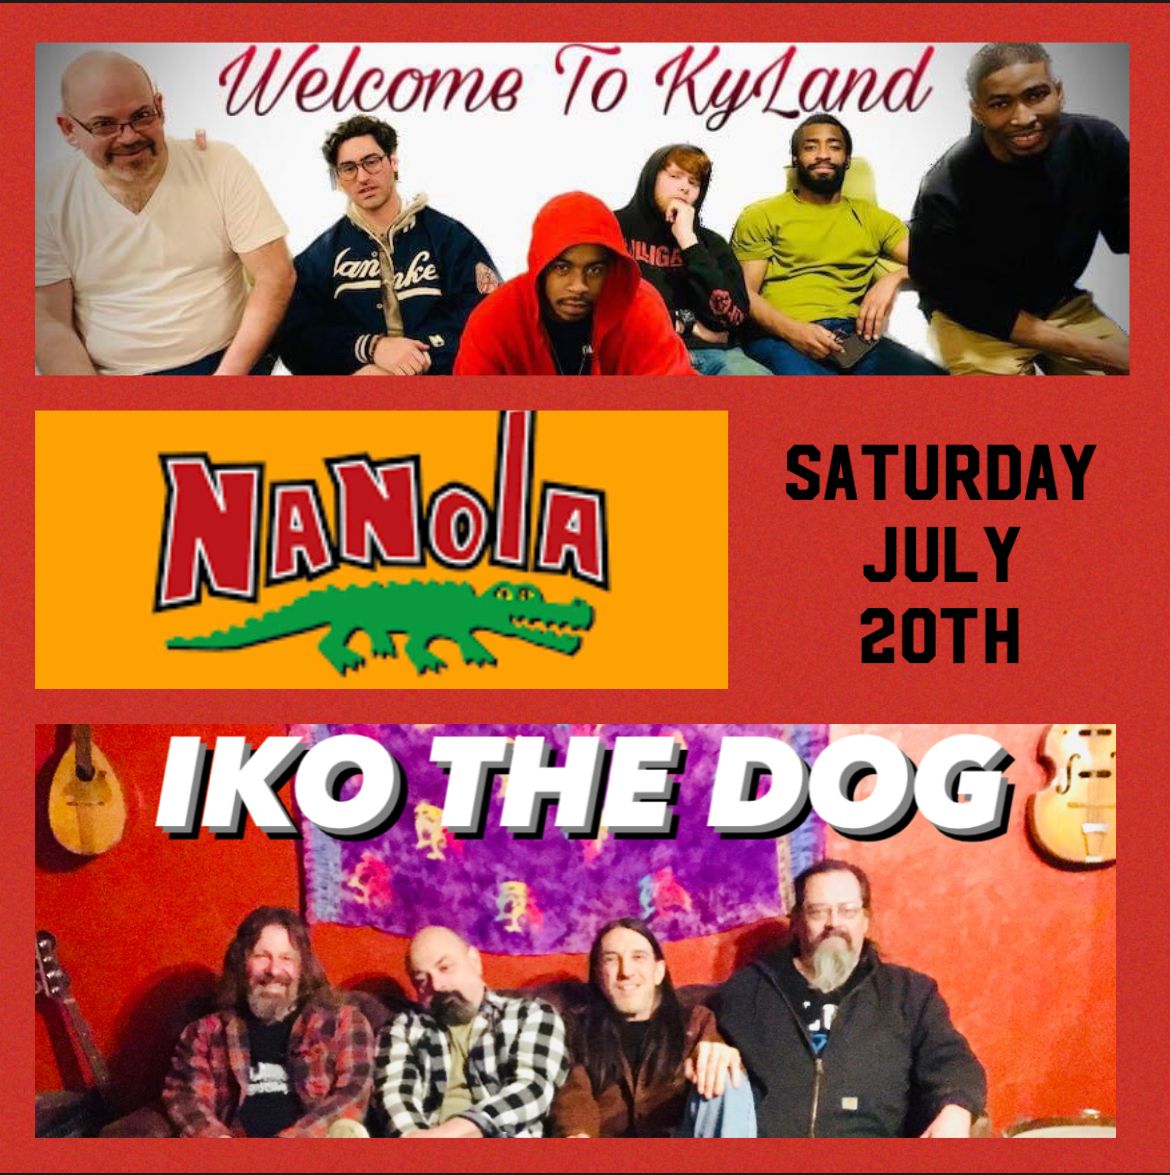 Welcome to Kyland and IKO the DOG at Nanola